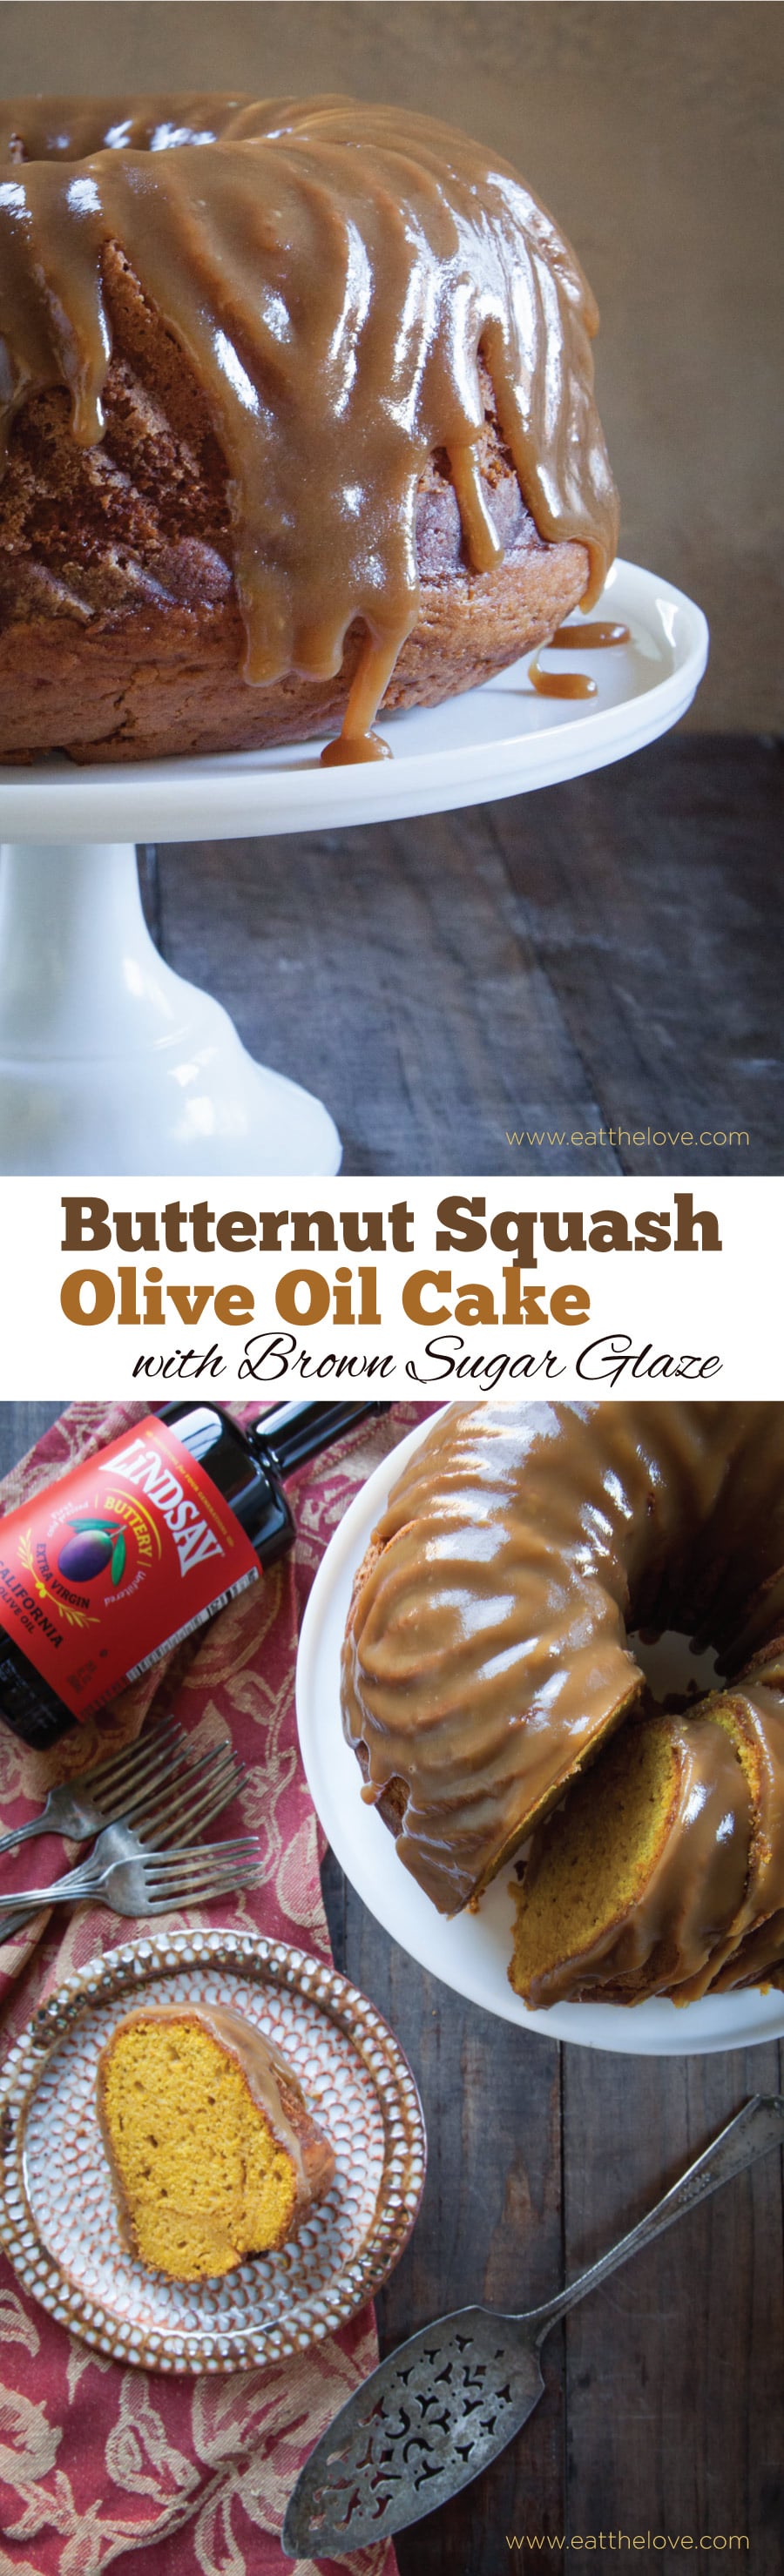 Butternut Squash Olive Oil Cake with Brown Sugar Glaze.